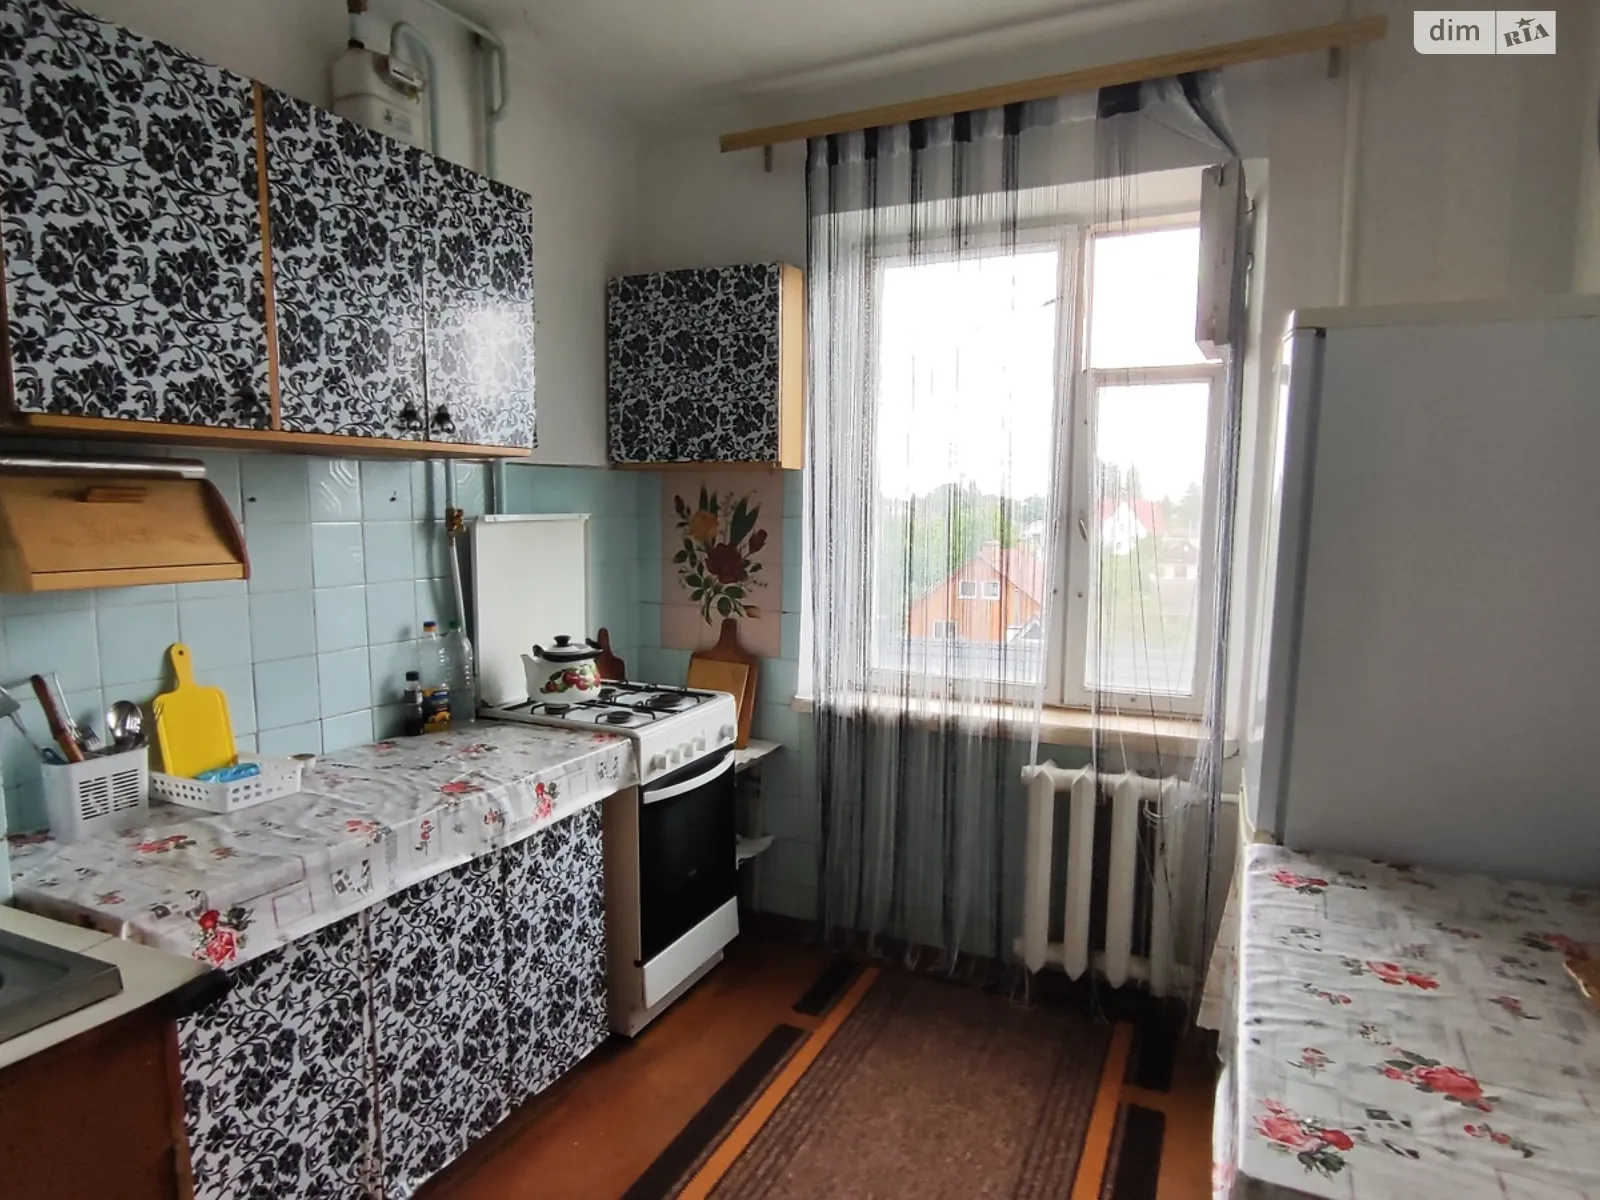 Сдается в аренду 2-комнатная квартира 50 кв. м в Ровно - фото 1